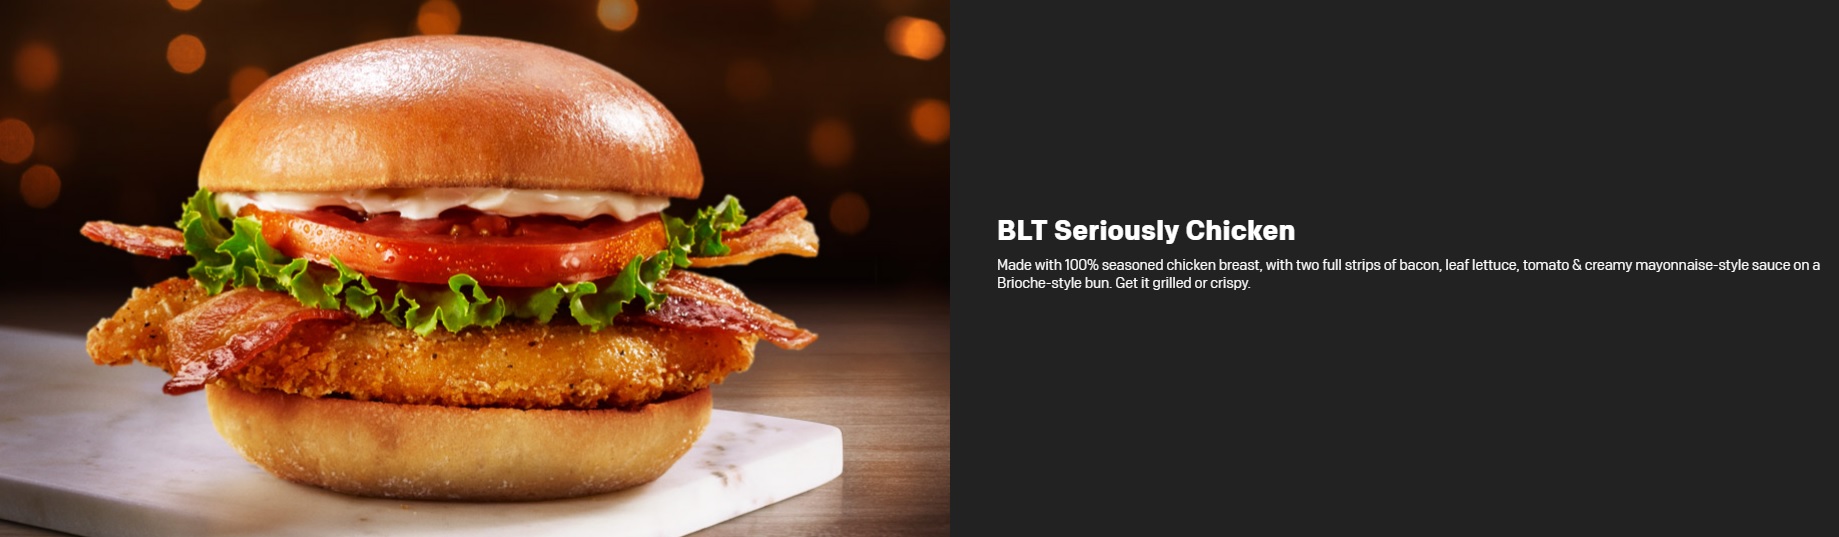 McDonald’s Seriously Festive Menu - BLT Seriously Chicken